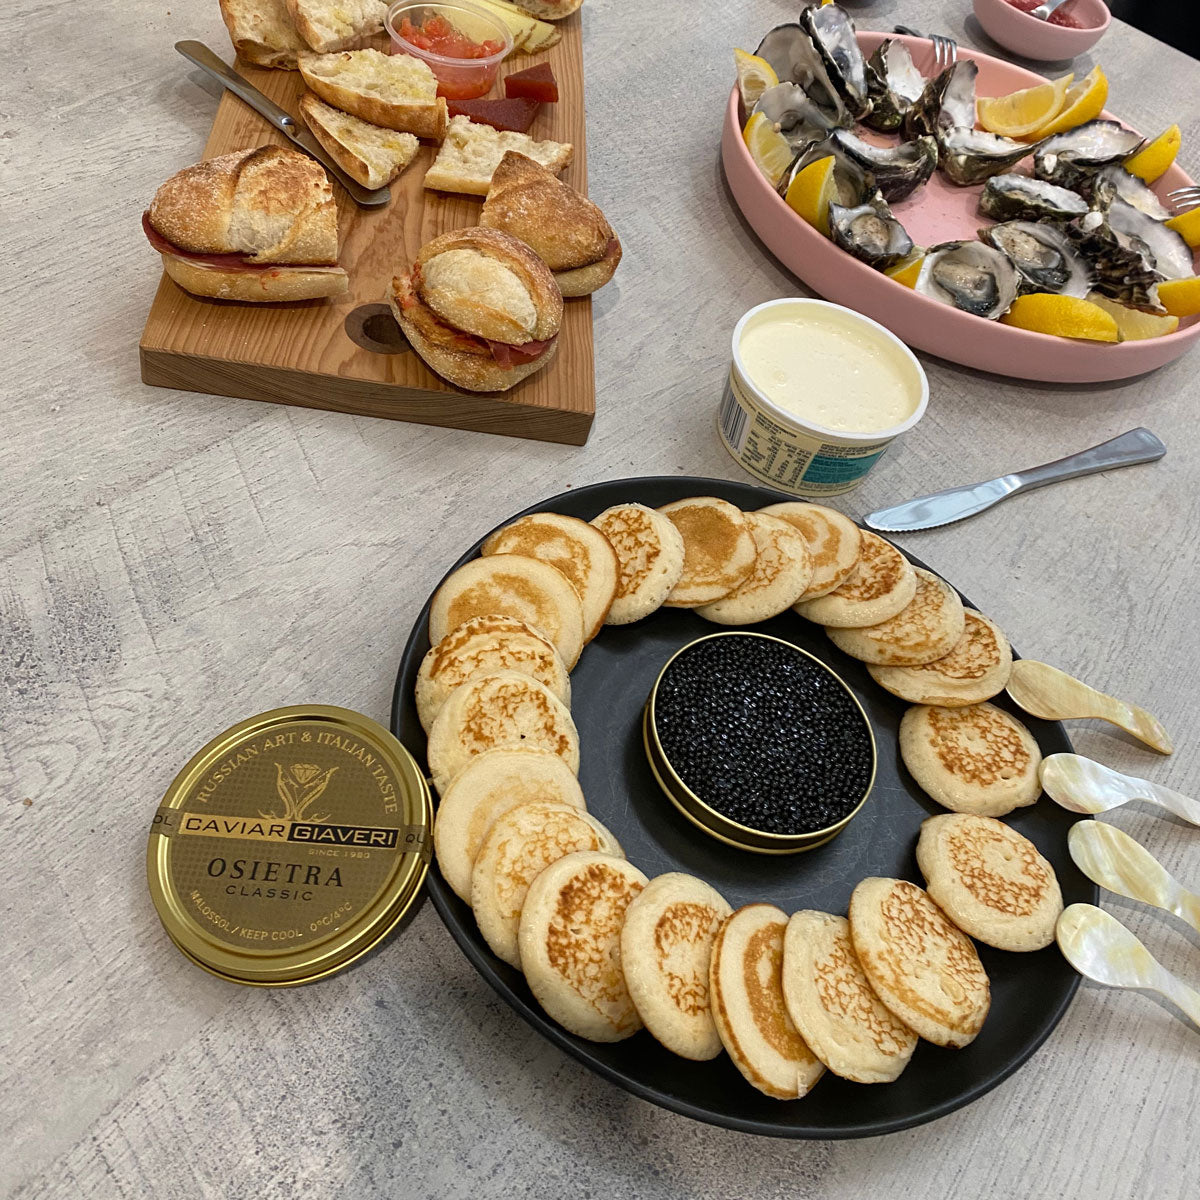 Delicious Caviar Breakfast from Montello Gourmet